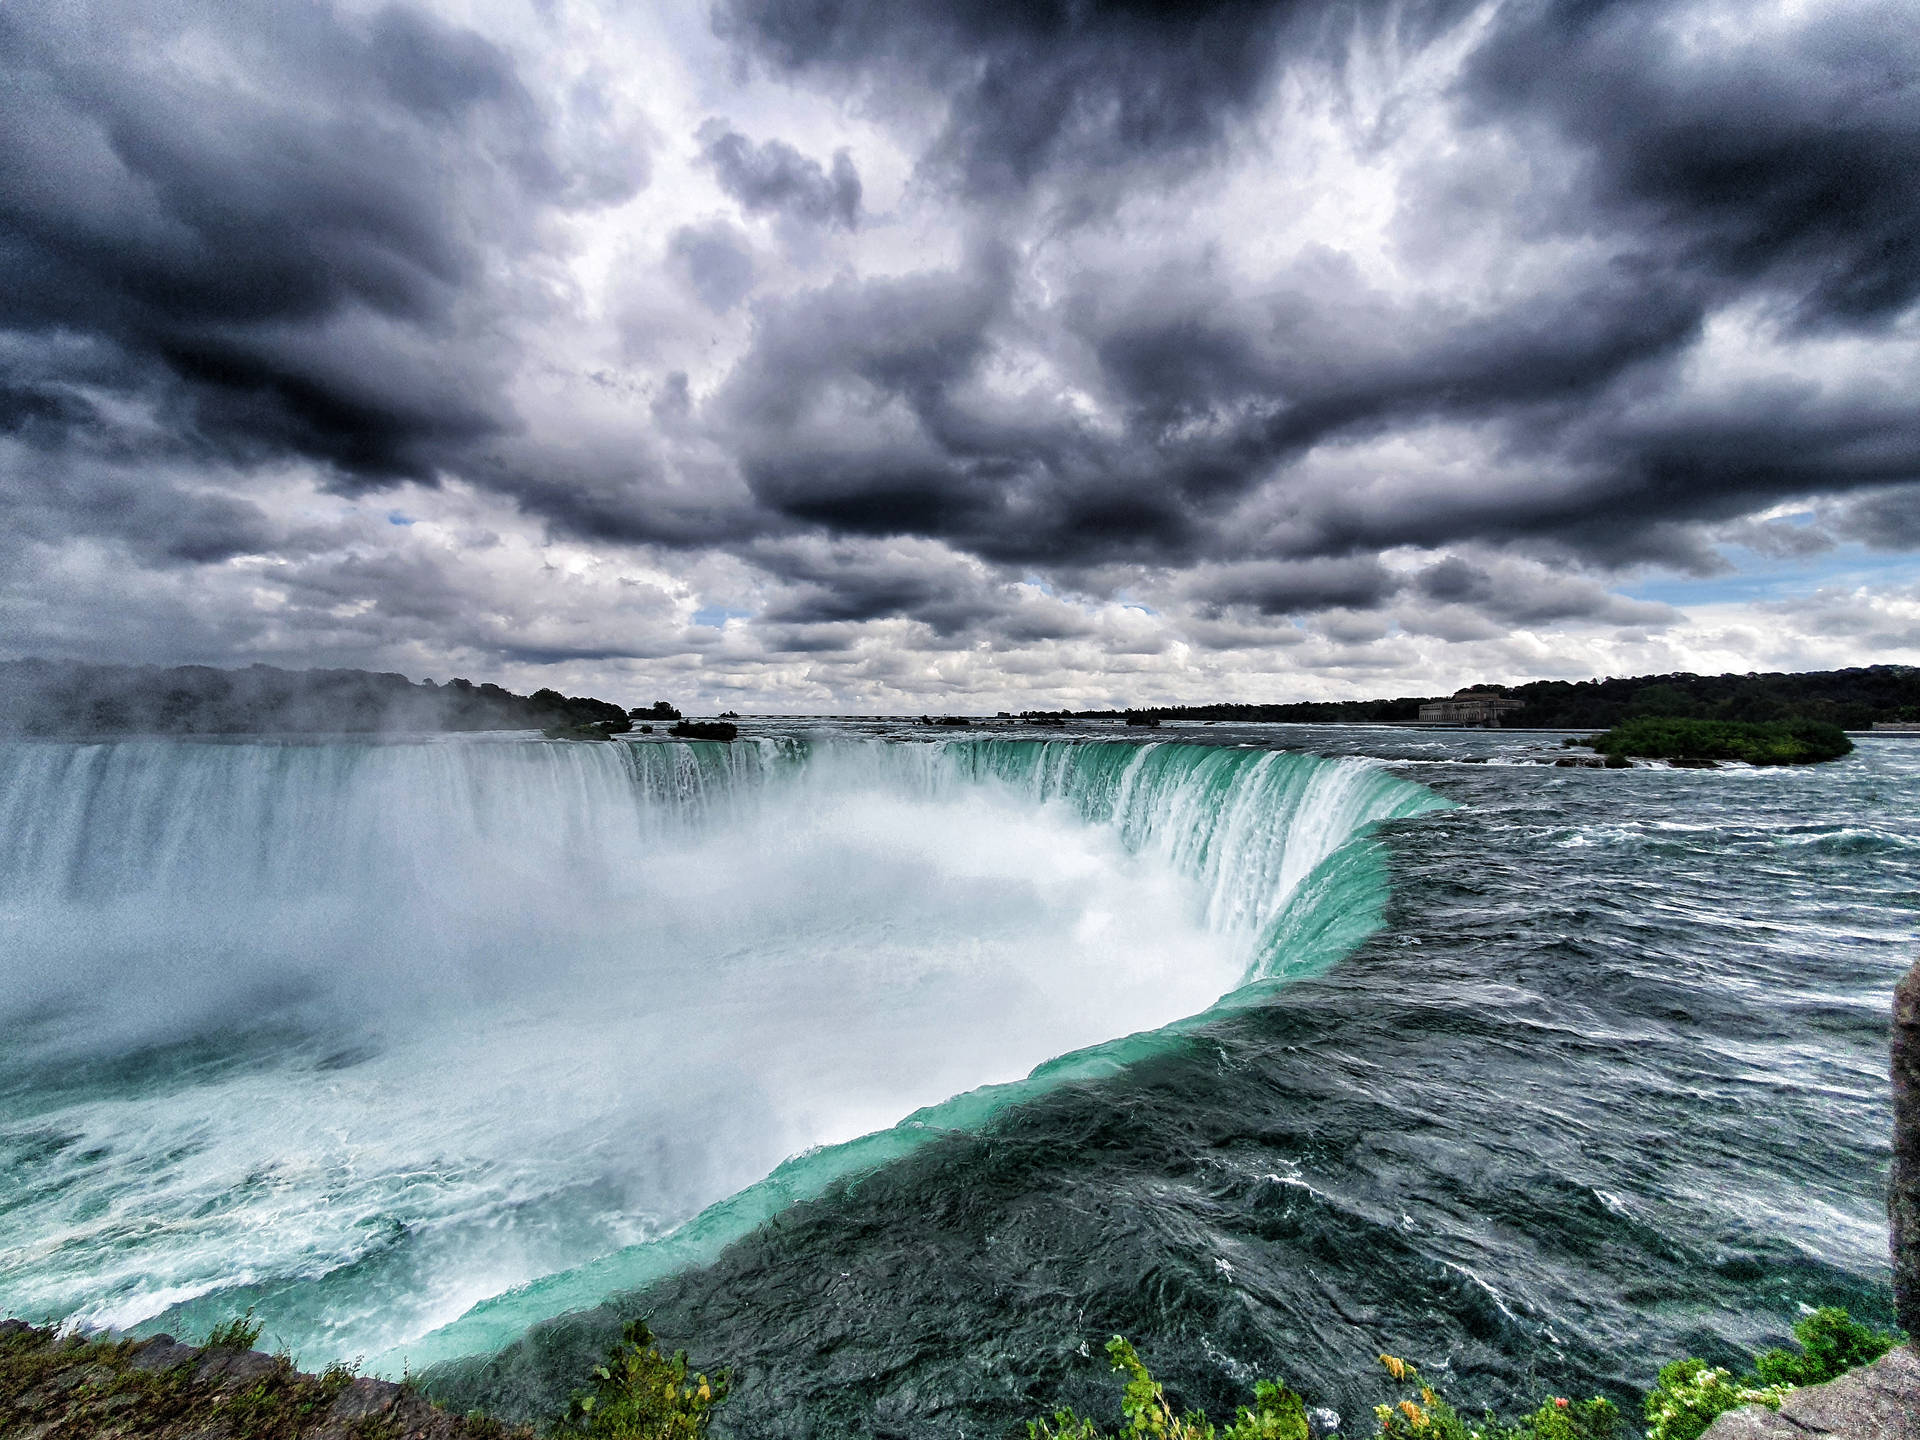 Niagara Falls 4608X3456 Wallpaper and Background Image